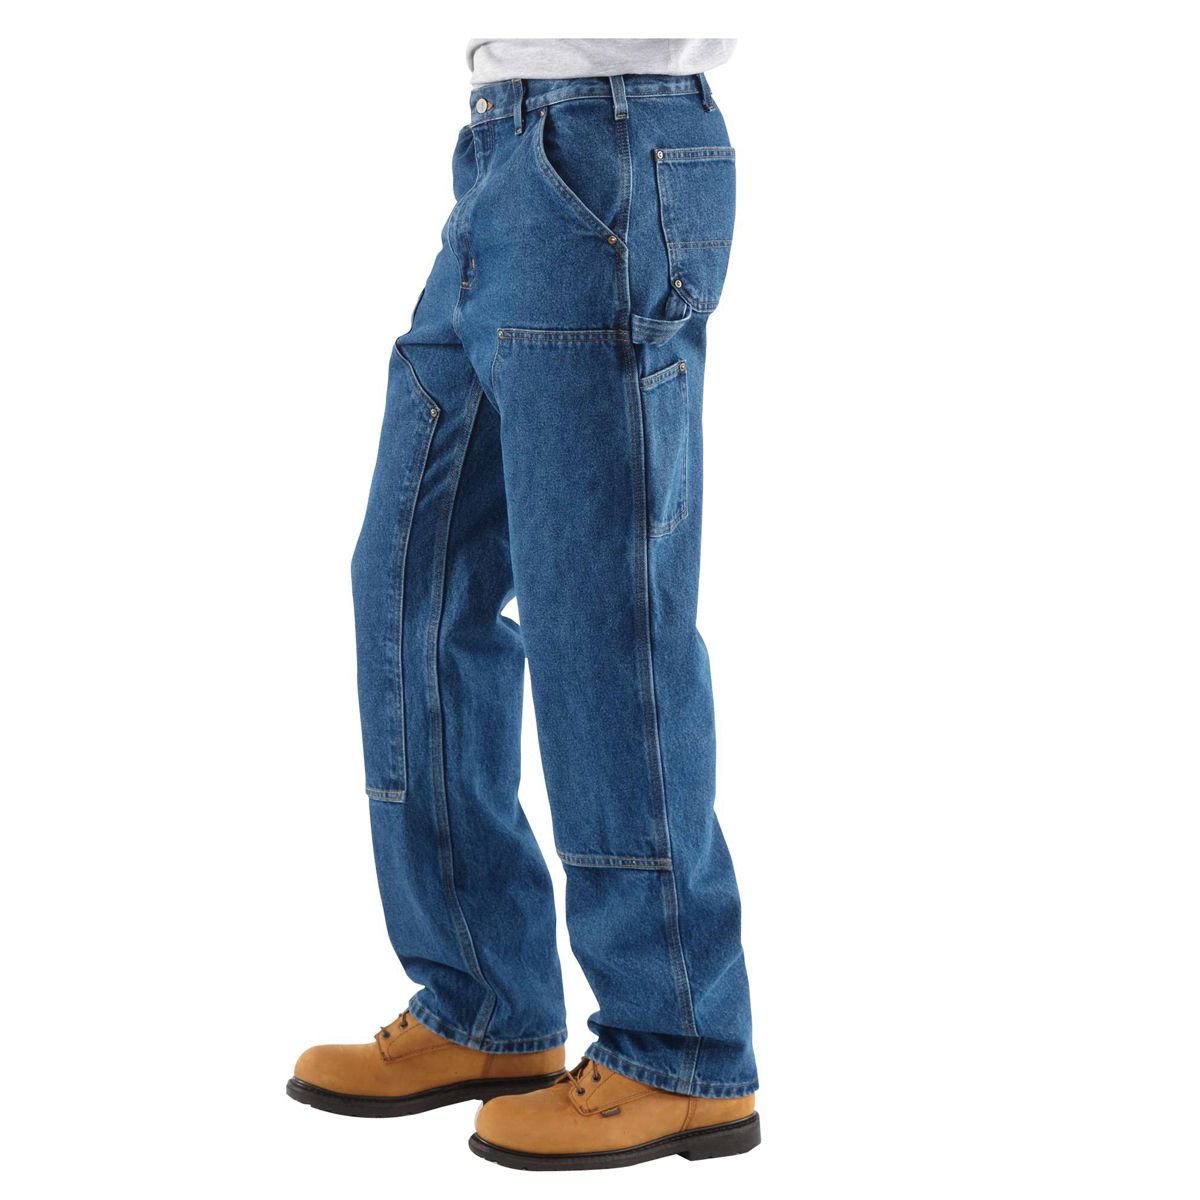 Carhartt B73-DST-40X32 Utility Logger Jeans, 40 in Waist, 32 in L Inseam, Darkstone, Loose Fit - 8